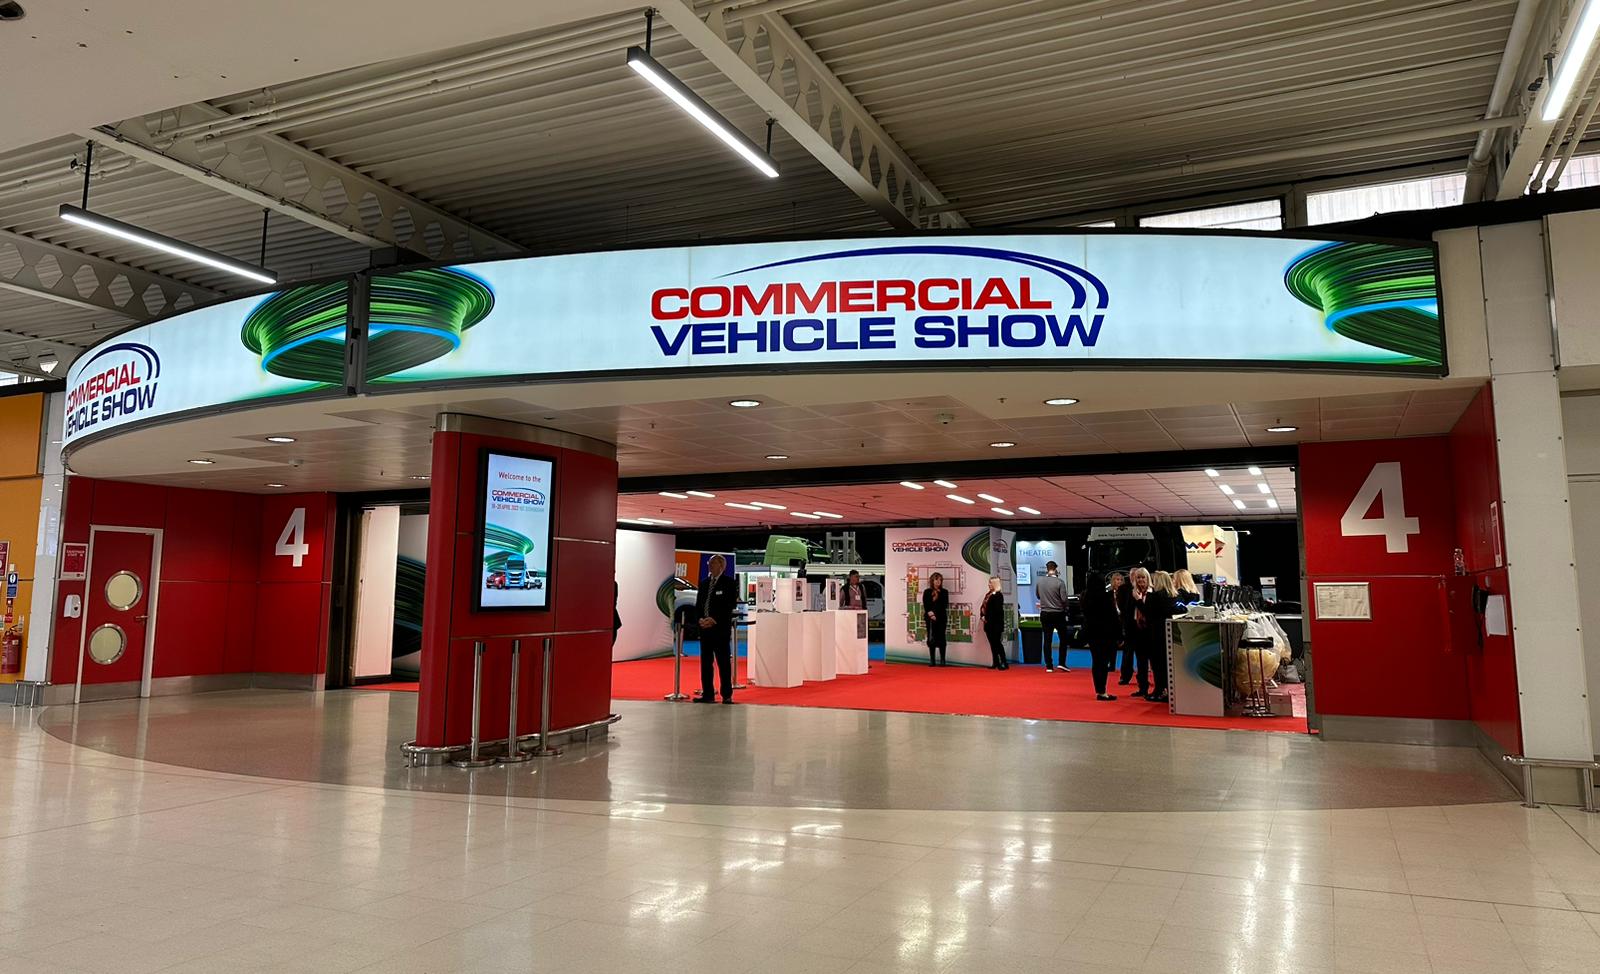 Commercial vehicle show entrance